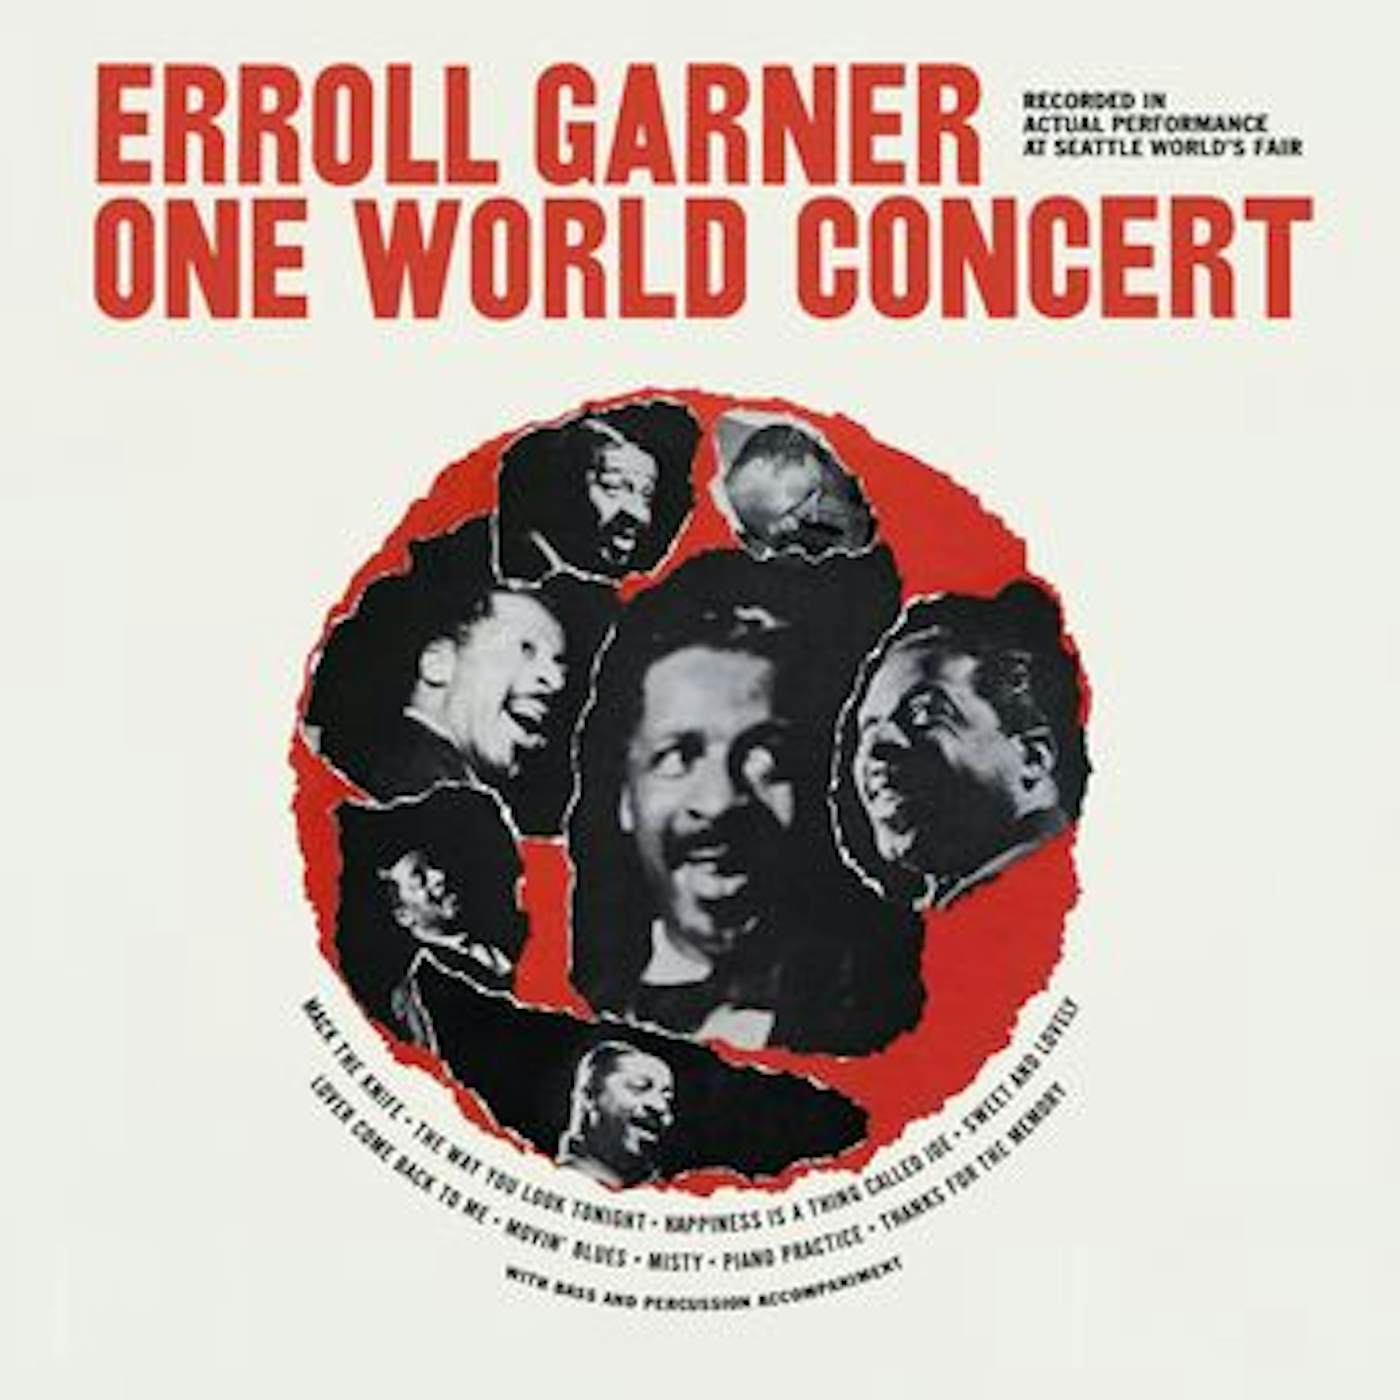 Erroll Garner ONE WORLD CONCERT (OCTAVE REMASTERED SERIES) CD